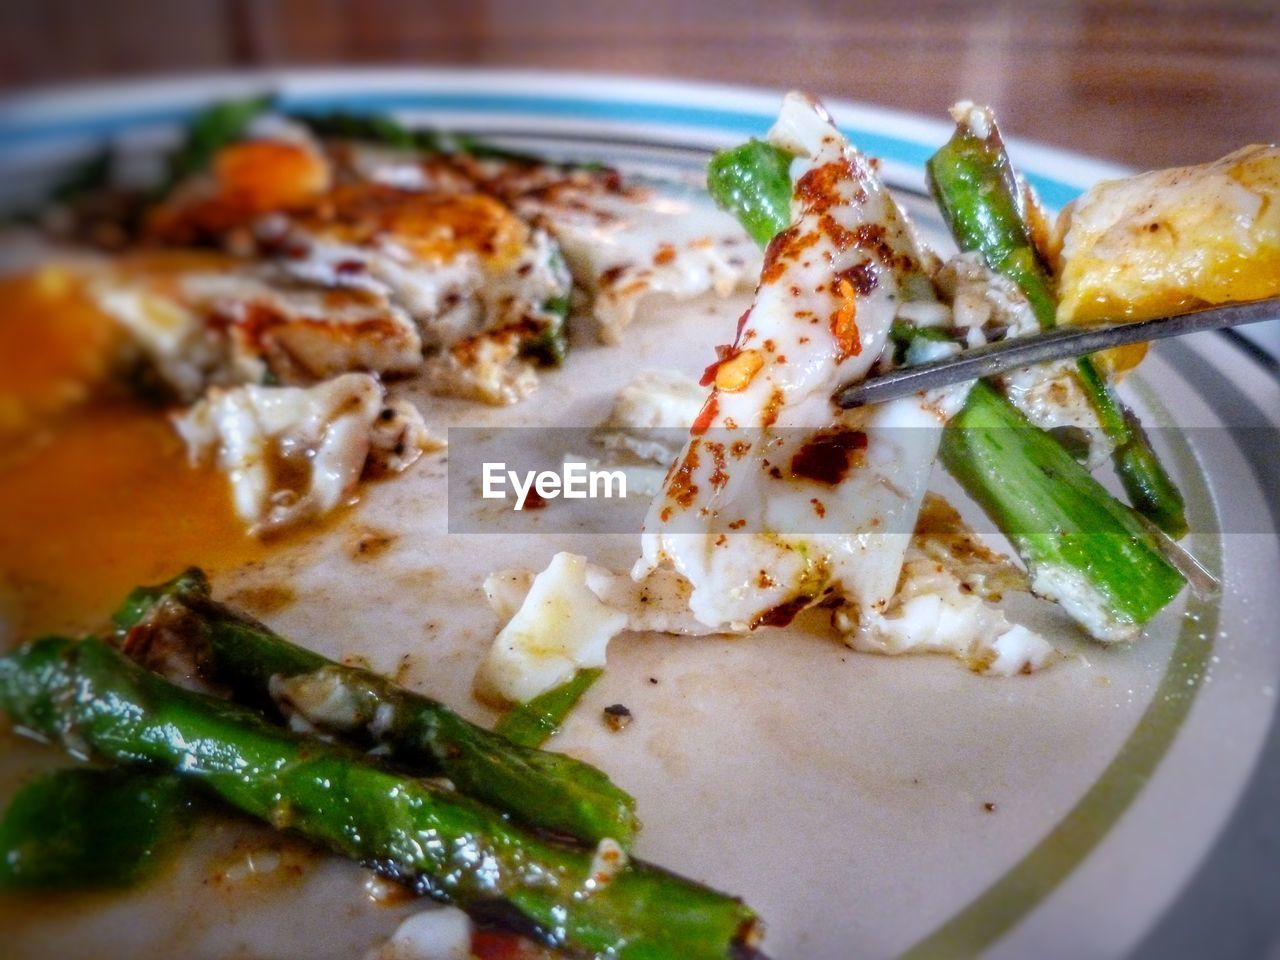 Detail shot of food in plate